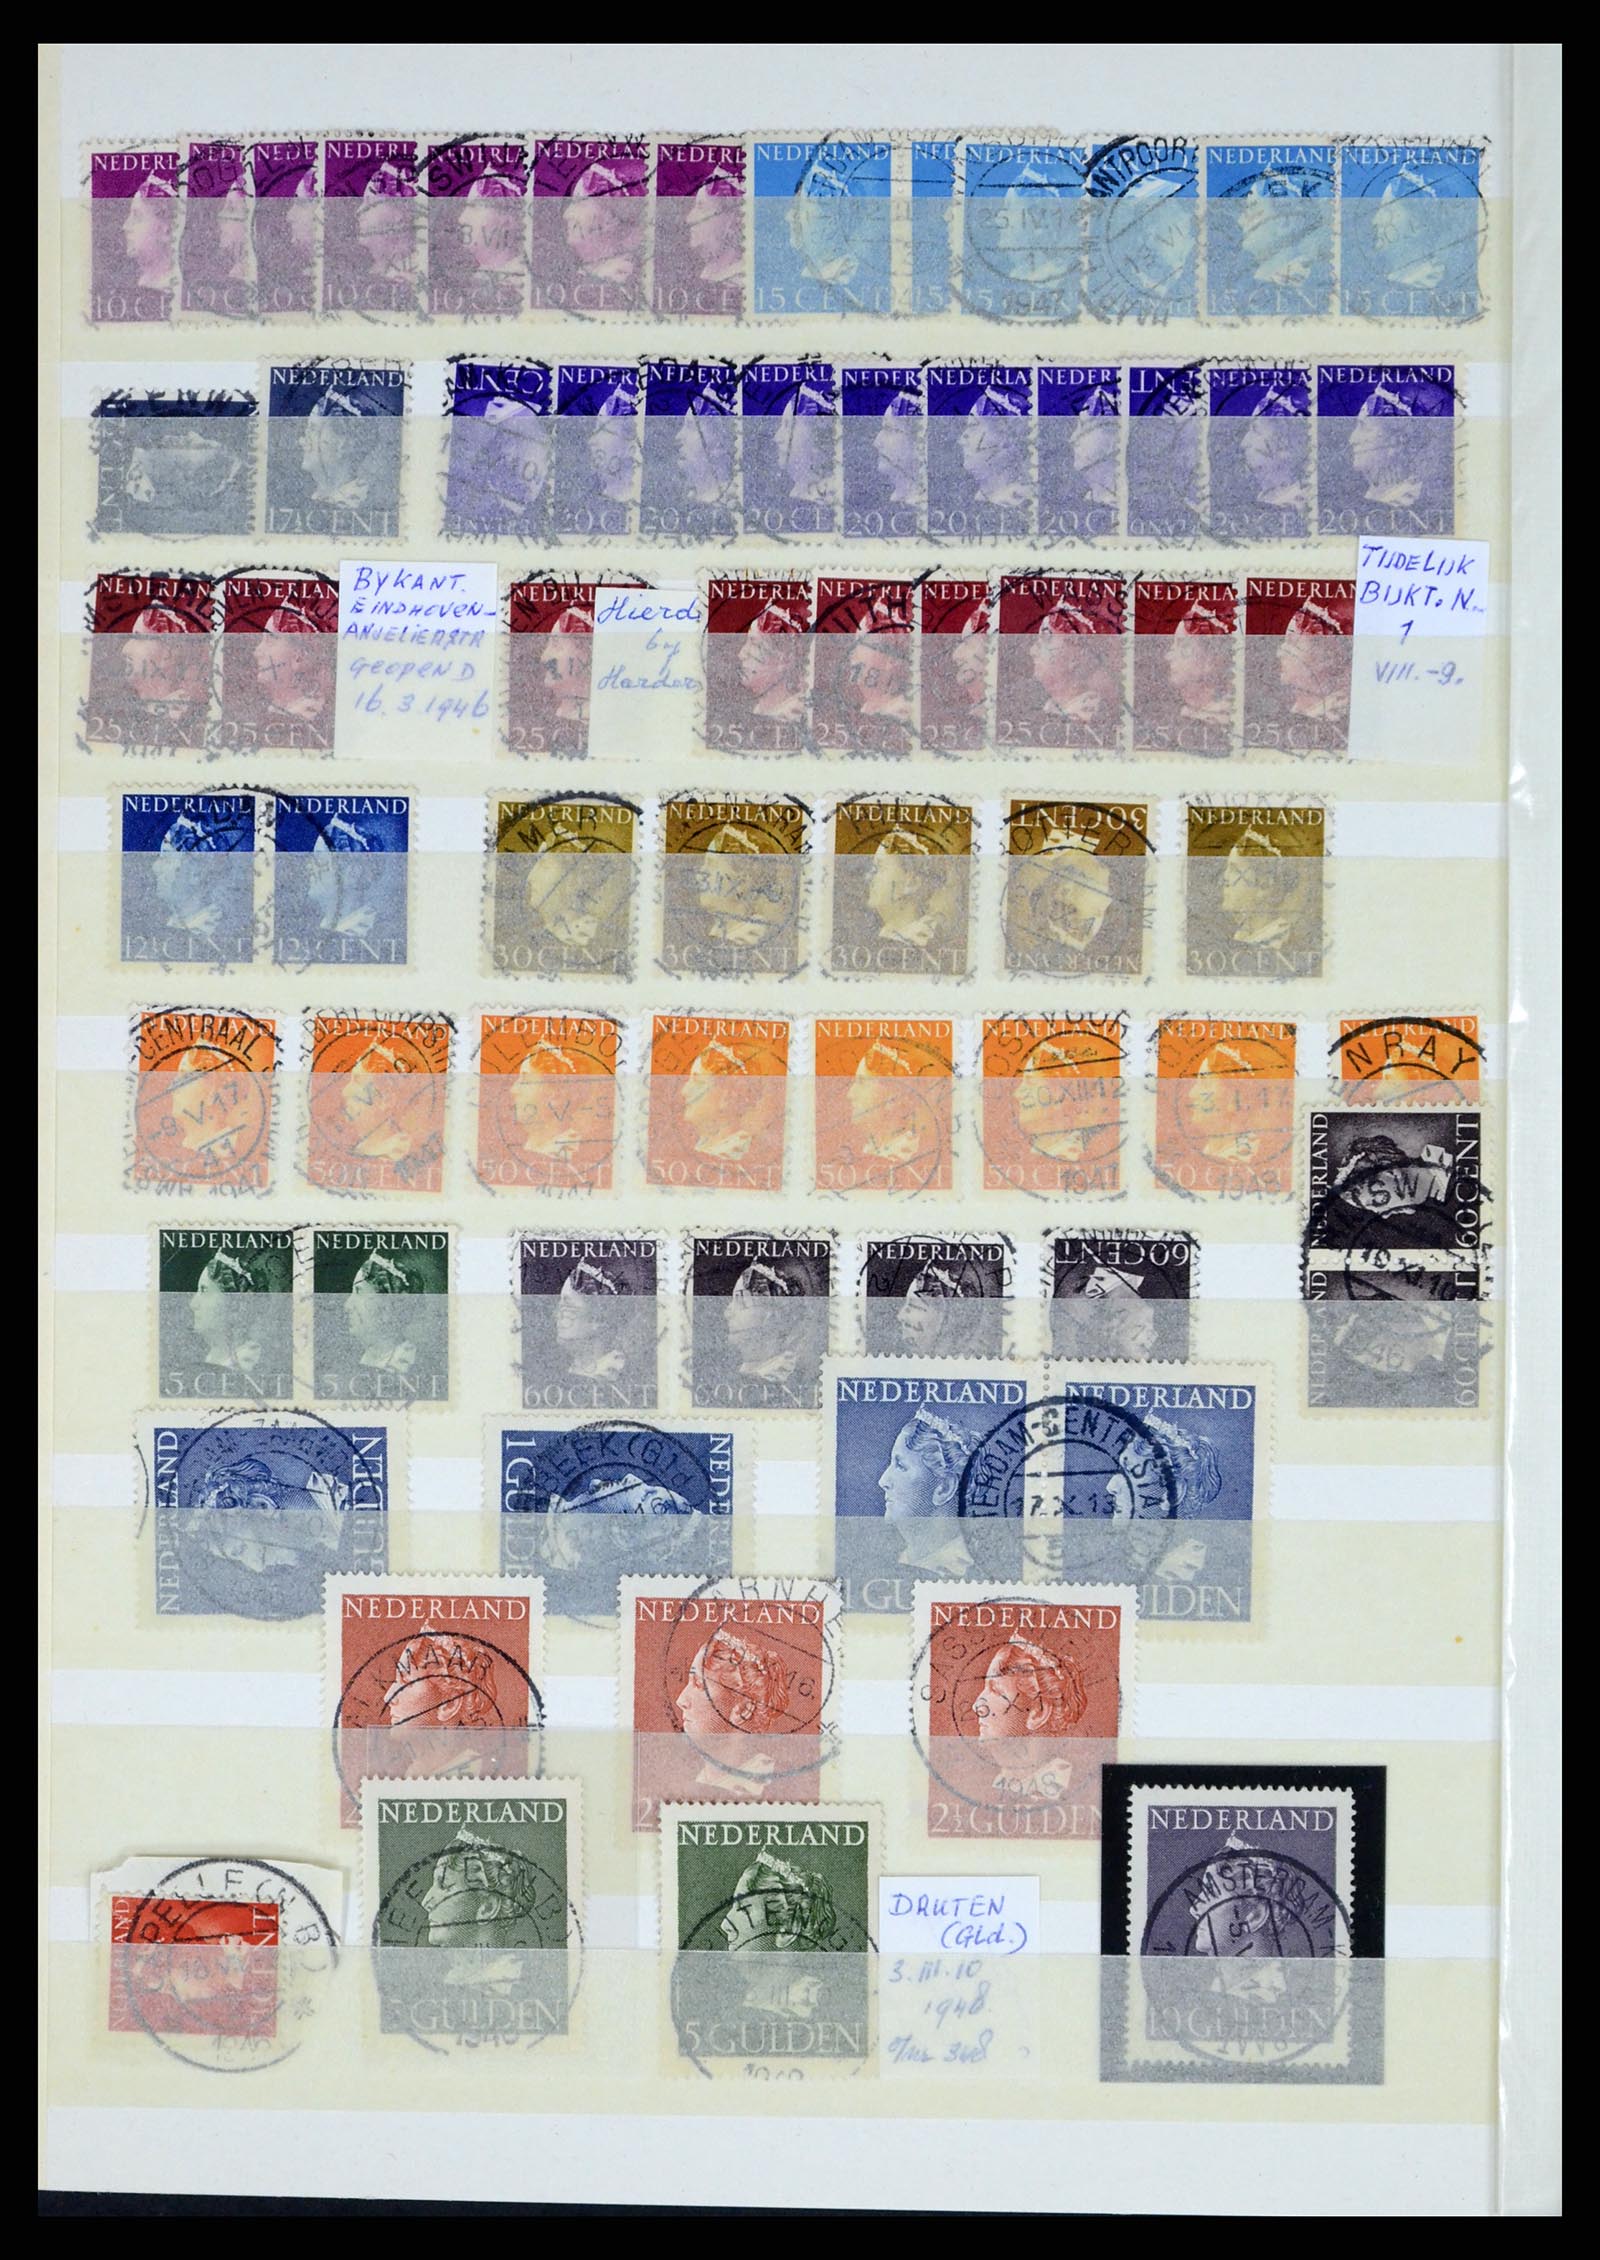 37424 028 - Stamp collection 37424 Netherlands shortbar cancels.